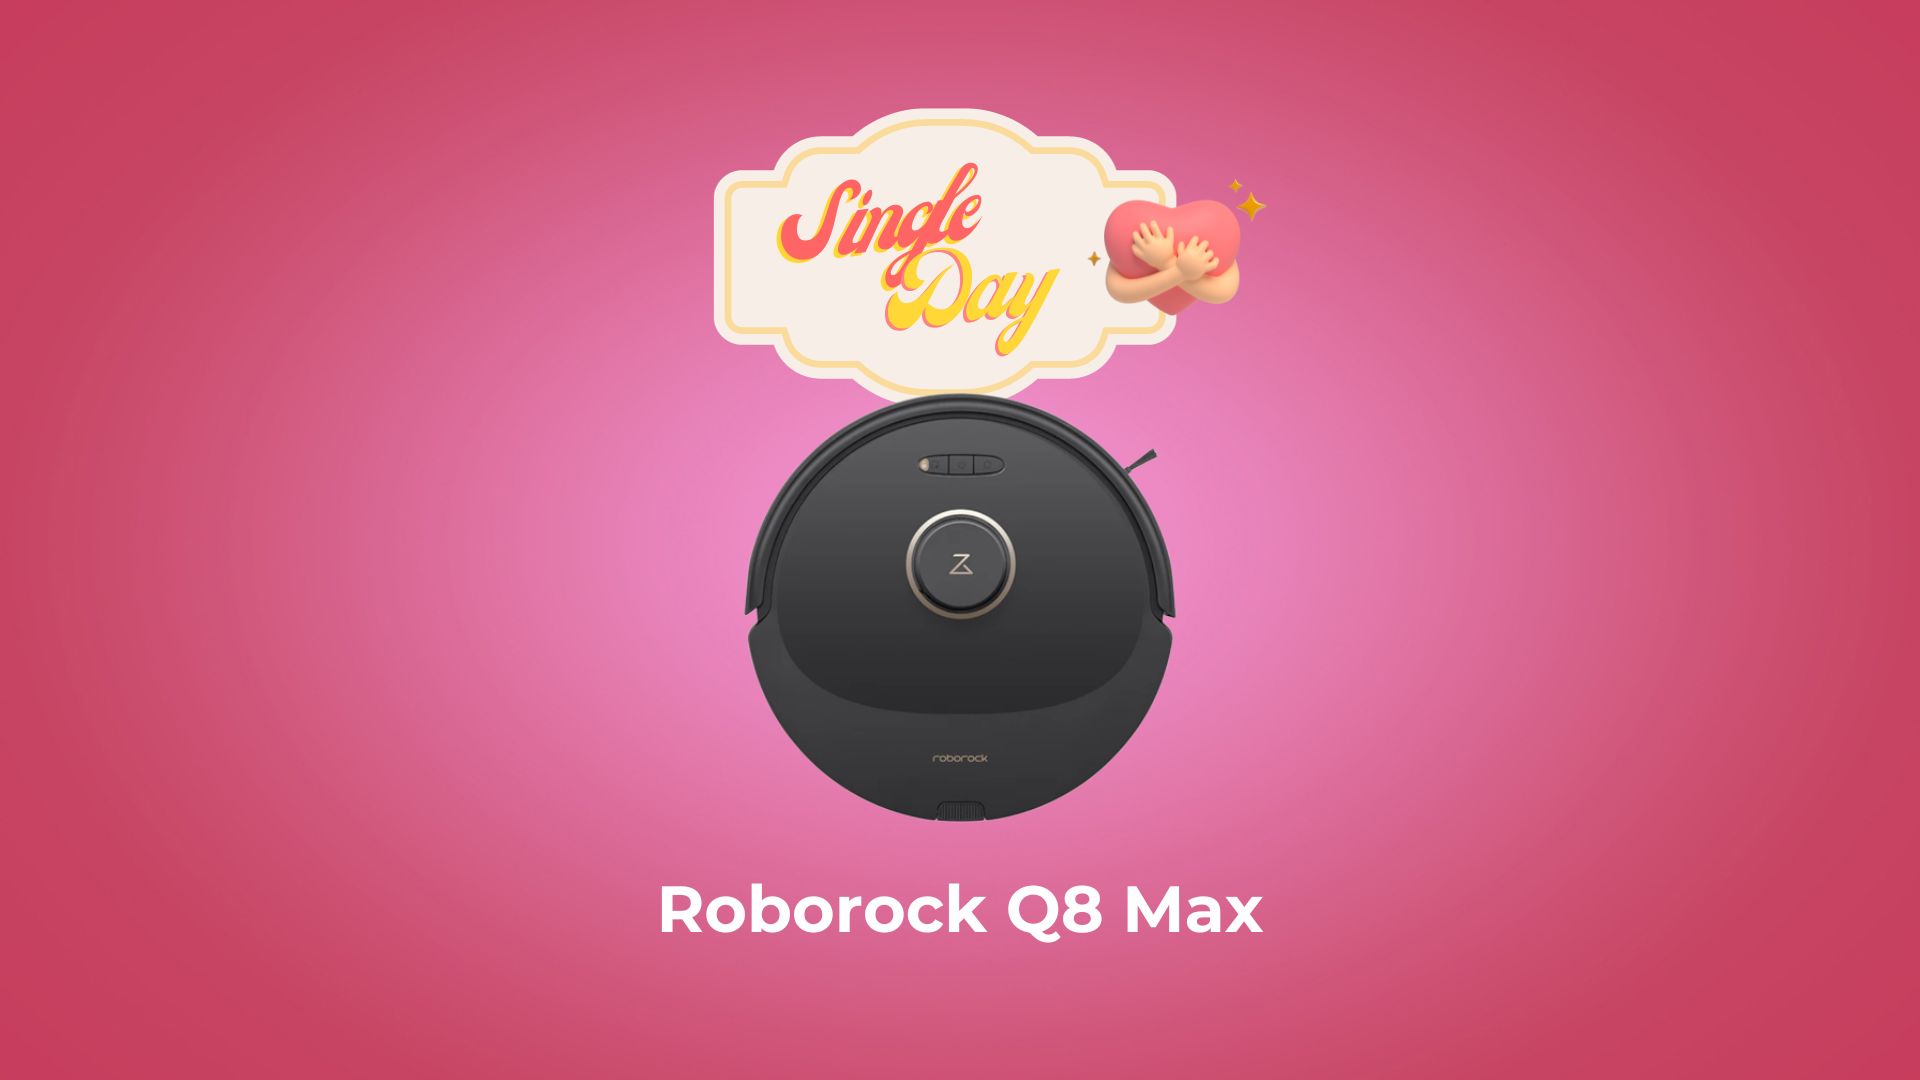 Aspirateur robot Roborock Robot Aspirateur Q8 Max Noir avec